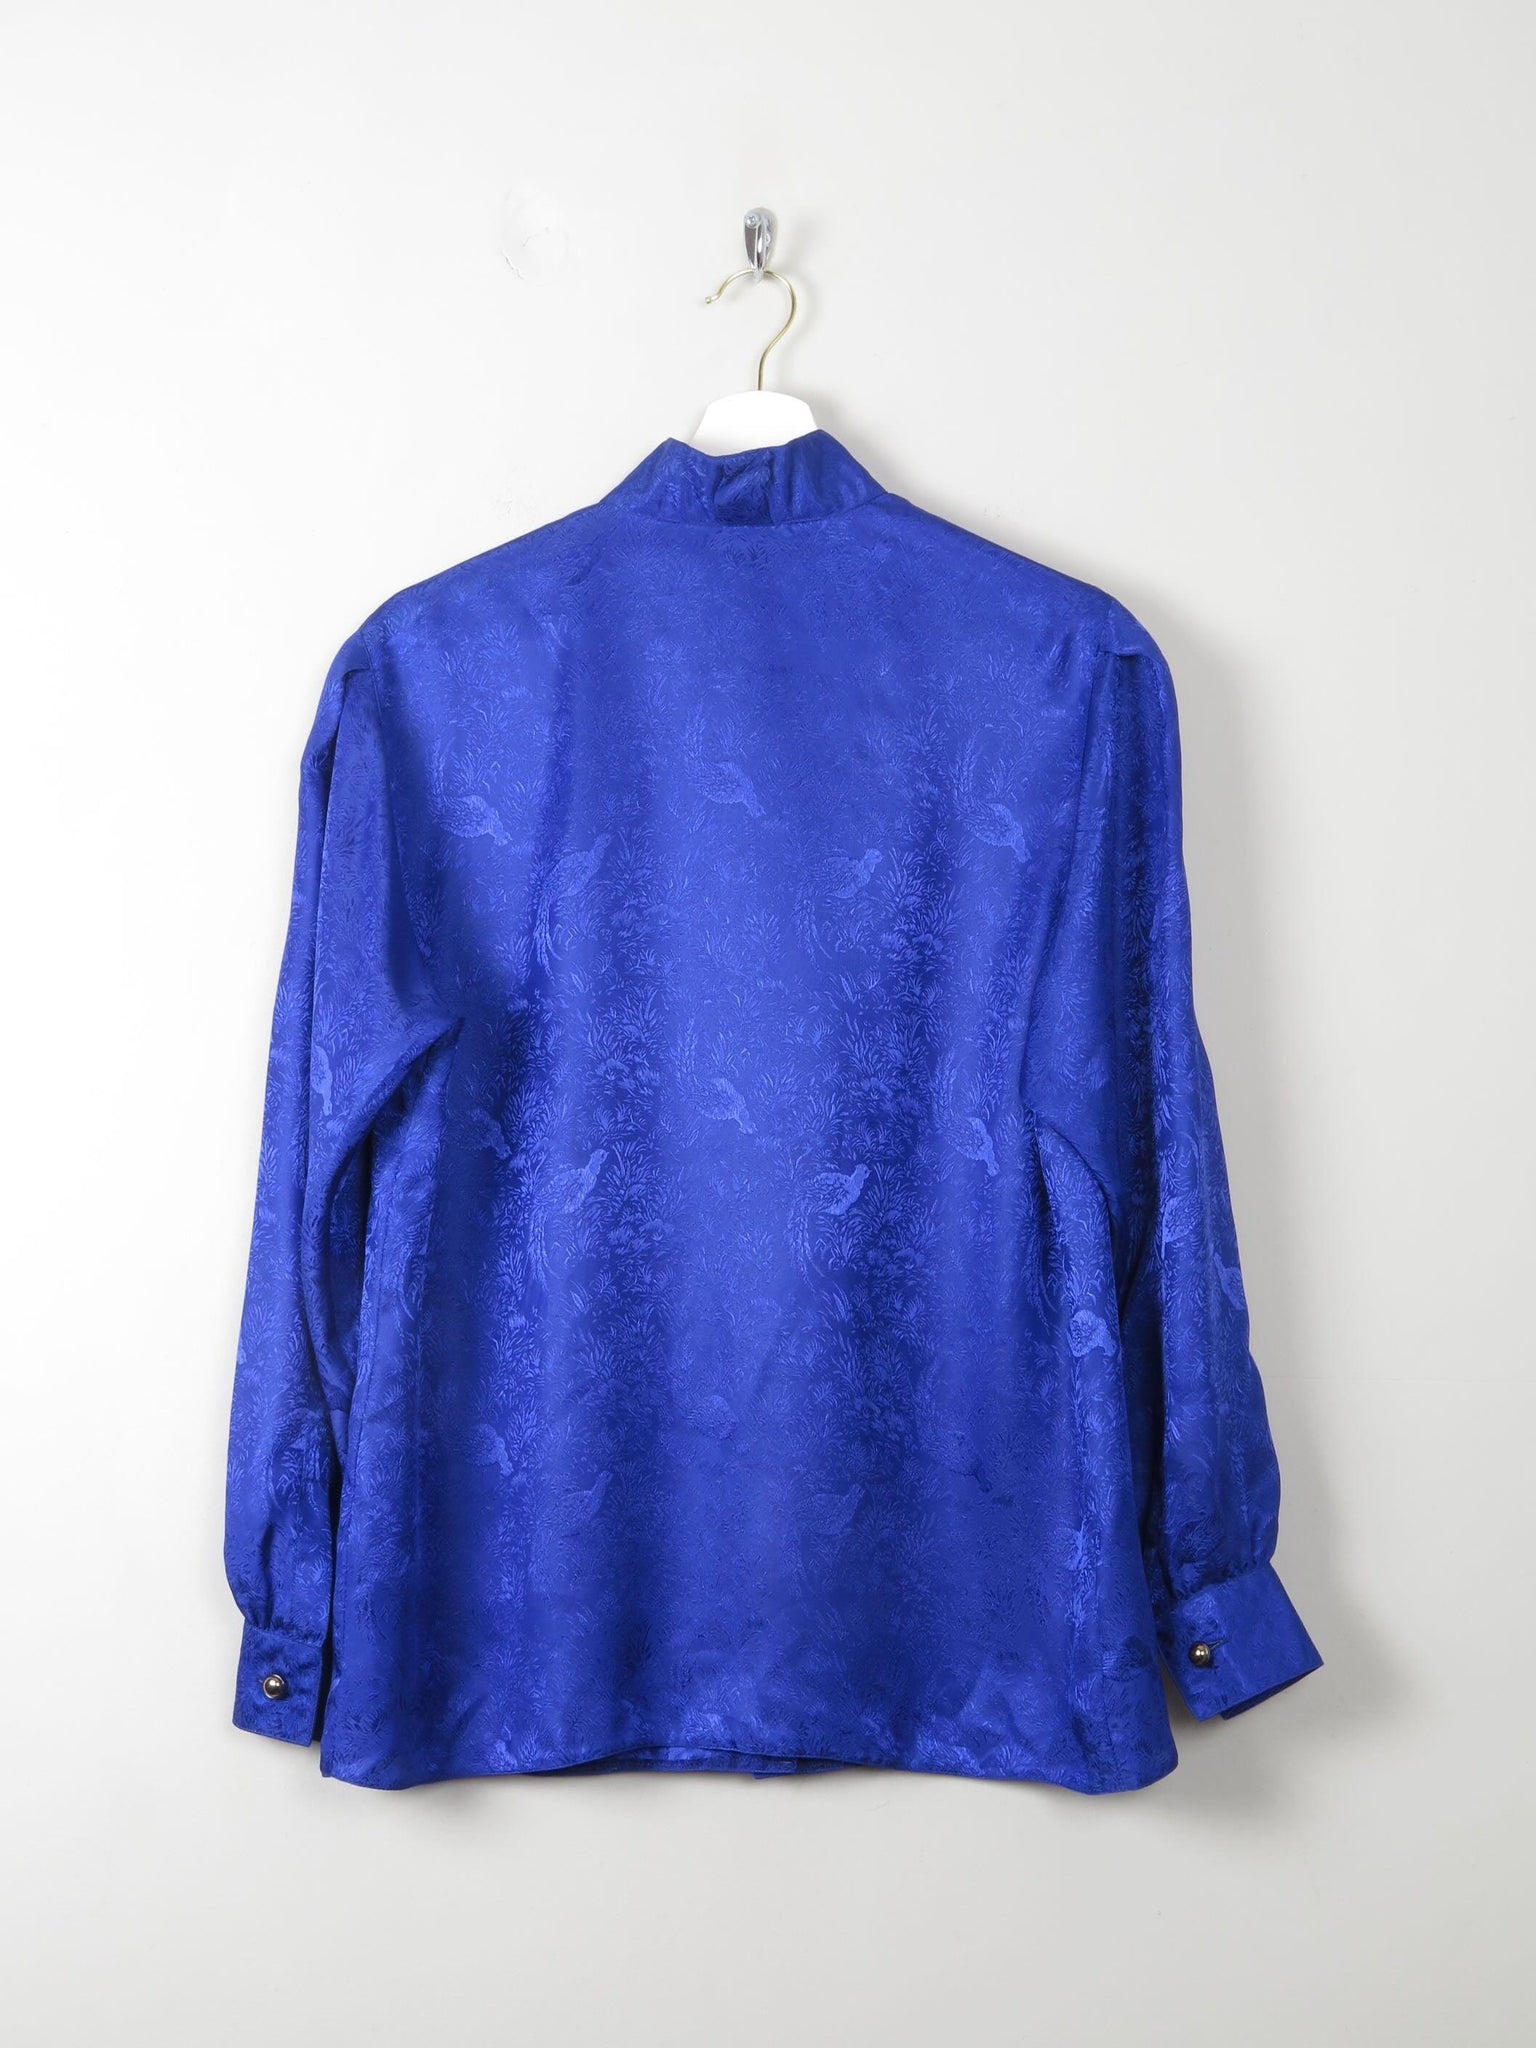 Women's Electric Blue Vintage Blouse M - The Harlequin